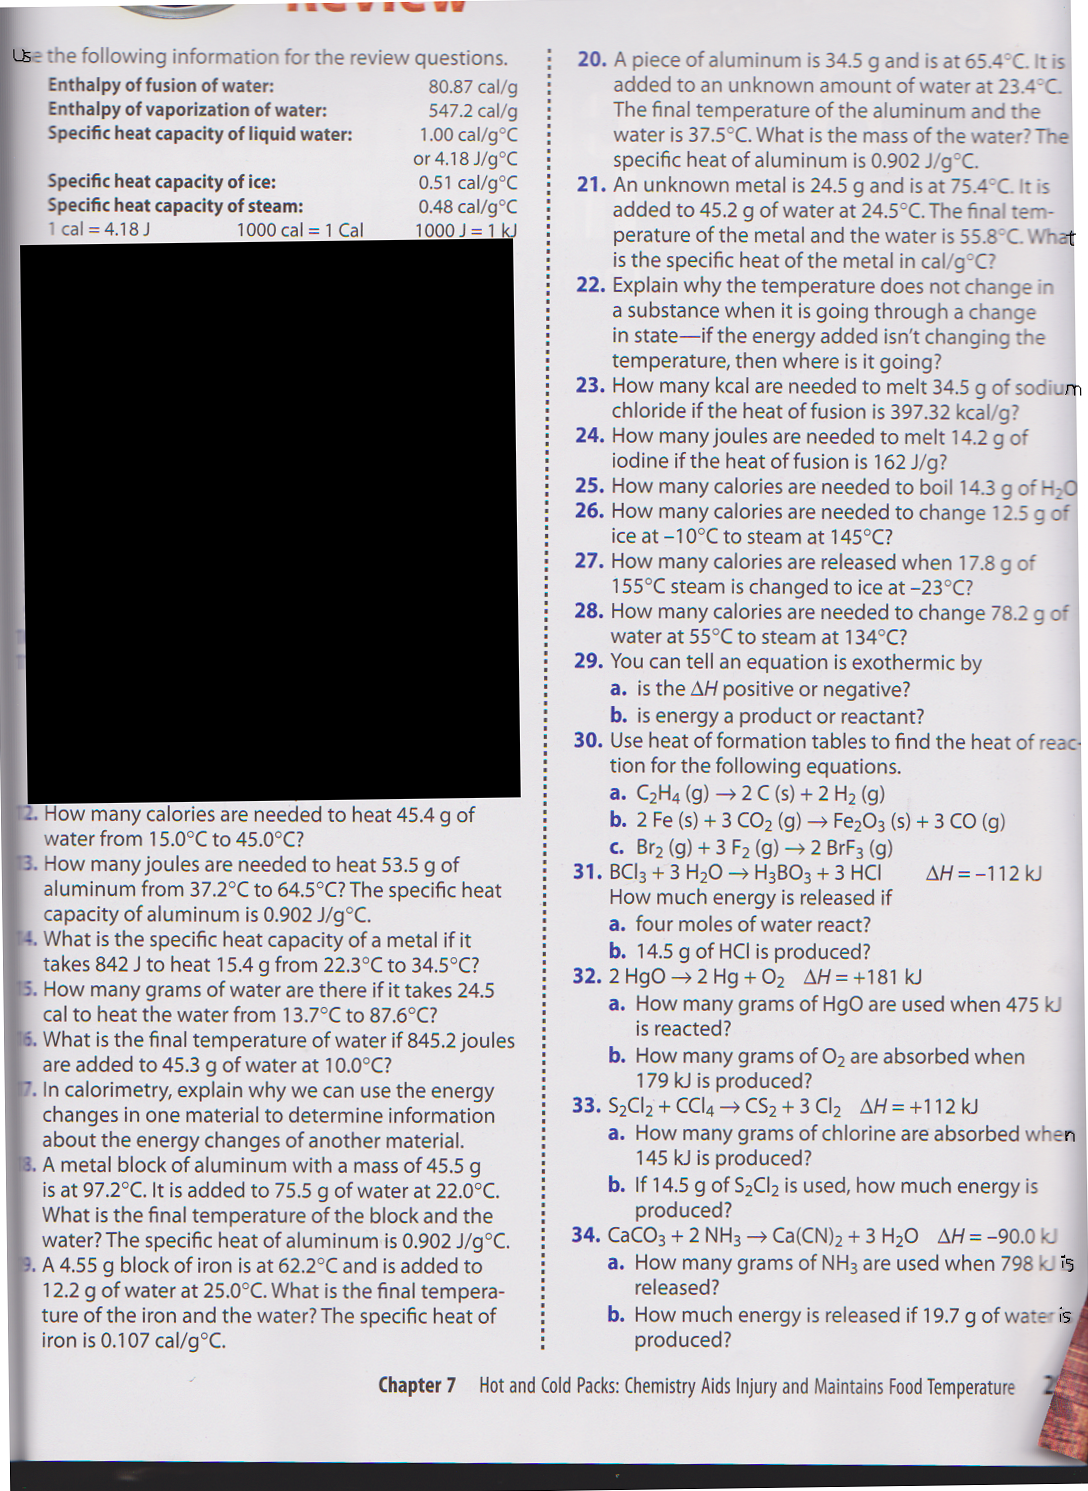 Chemistry homework help? | Yahoo Answers